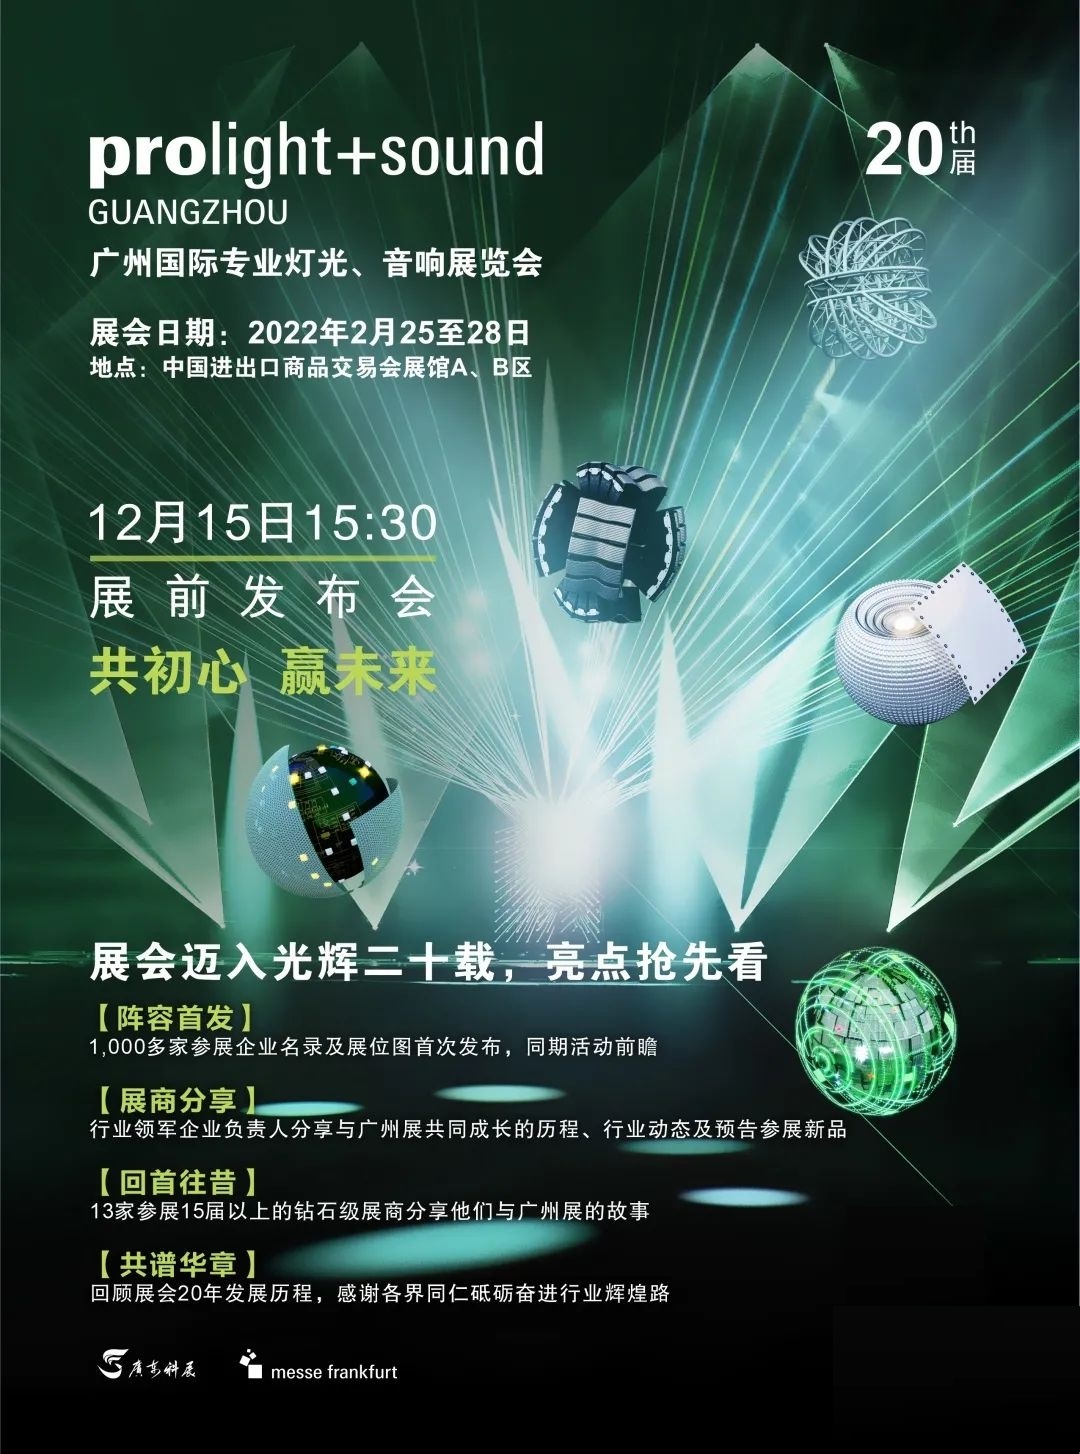 2020 GuangZhou Prolight sound  exhibition.jpg